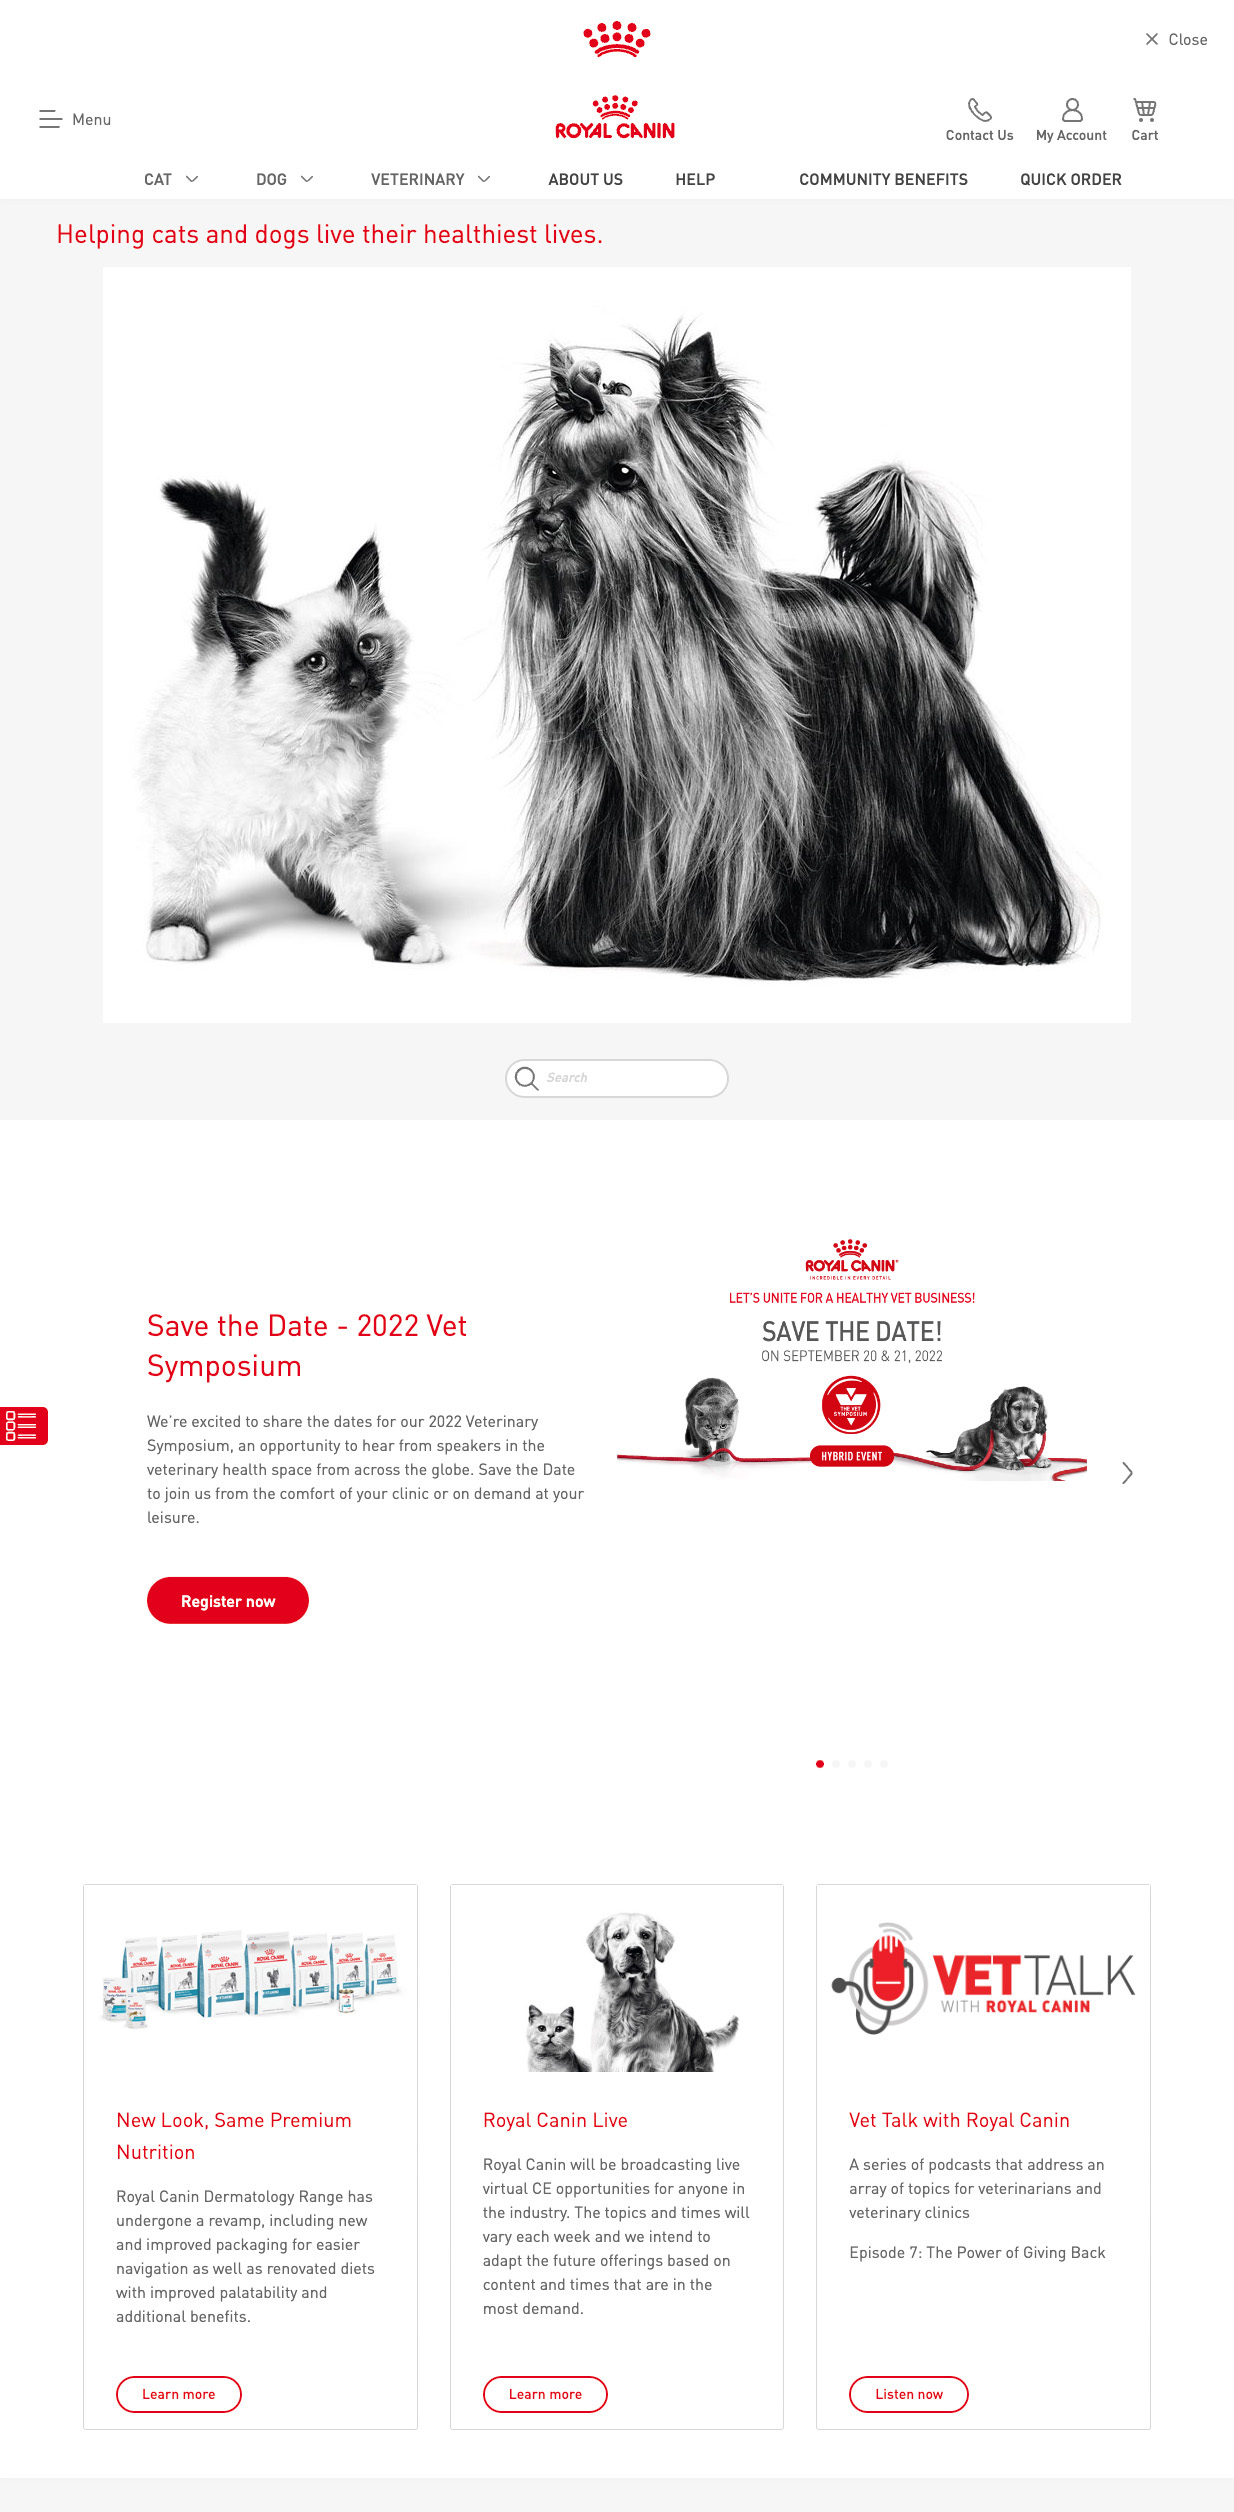 Royal Canin B2B eCommerce Portal image